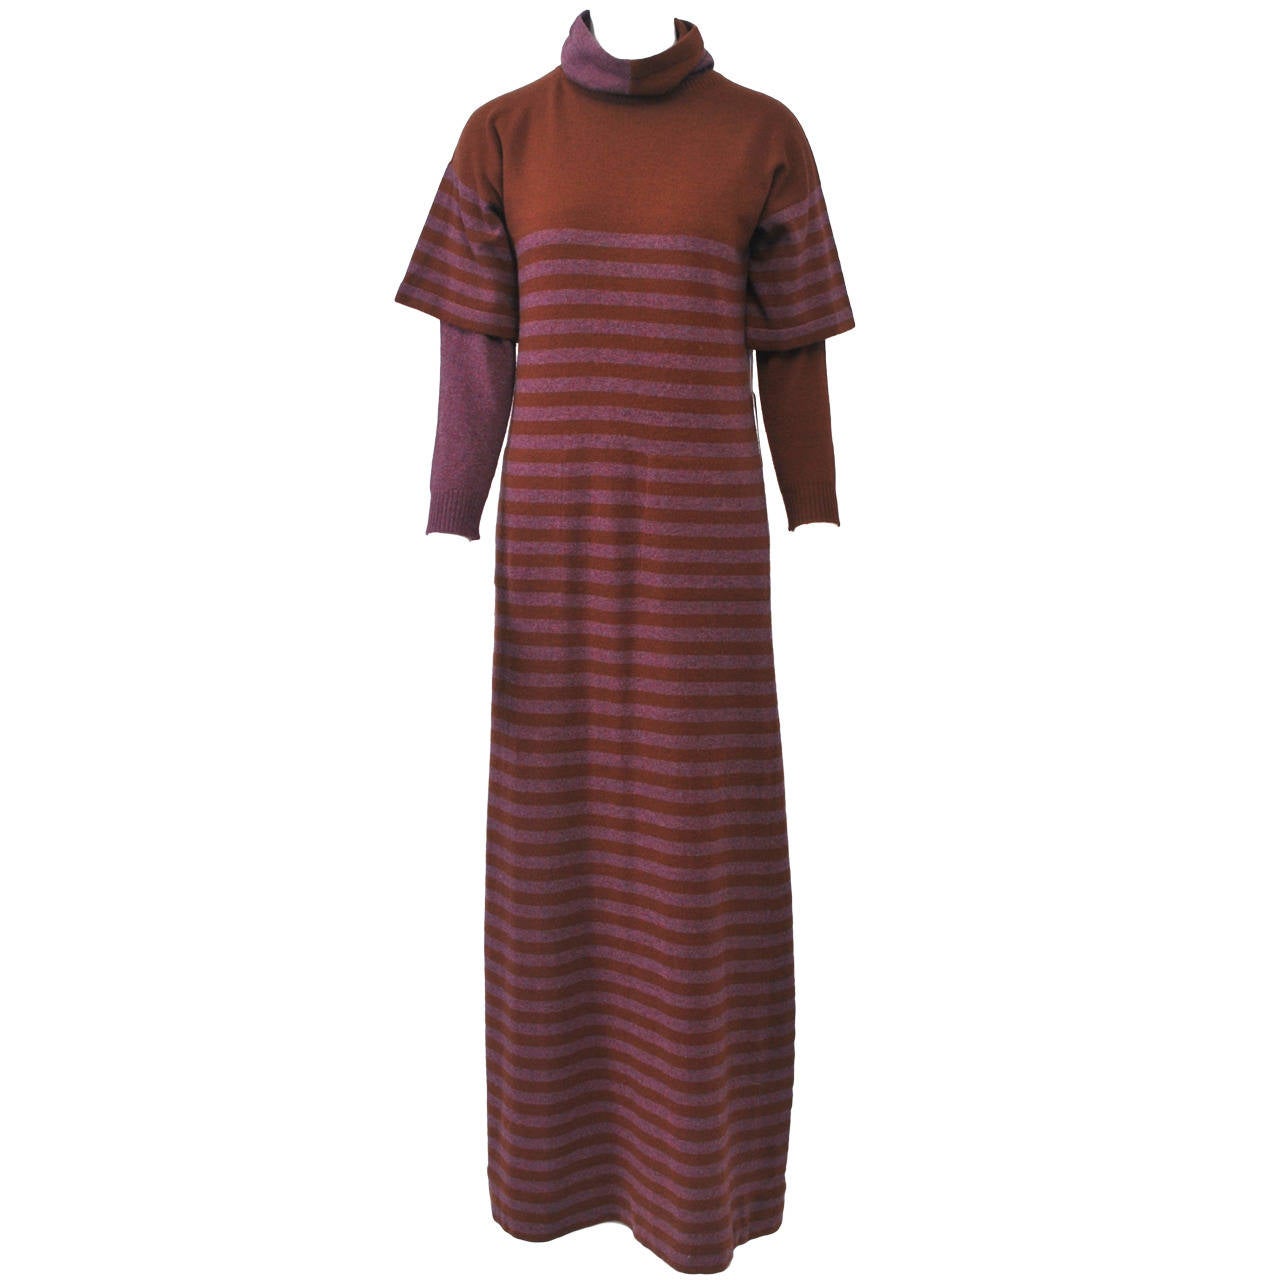 Bonnie Cashin Striped Knit Dress and Sweater